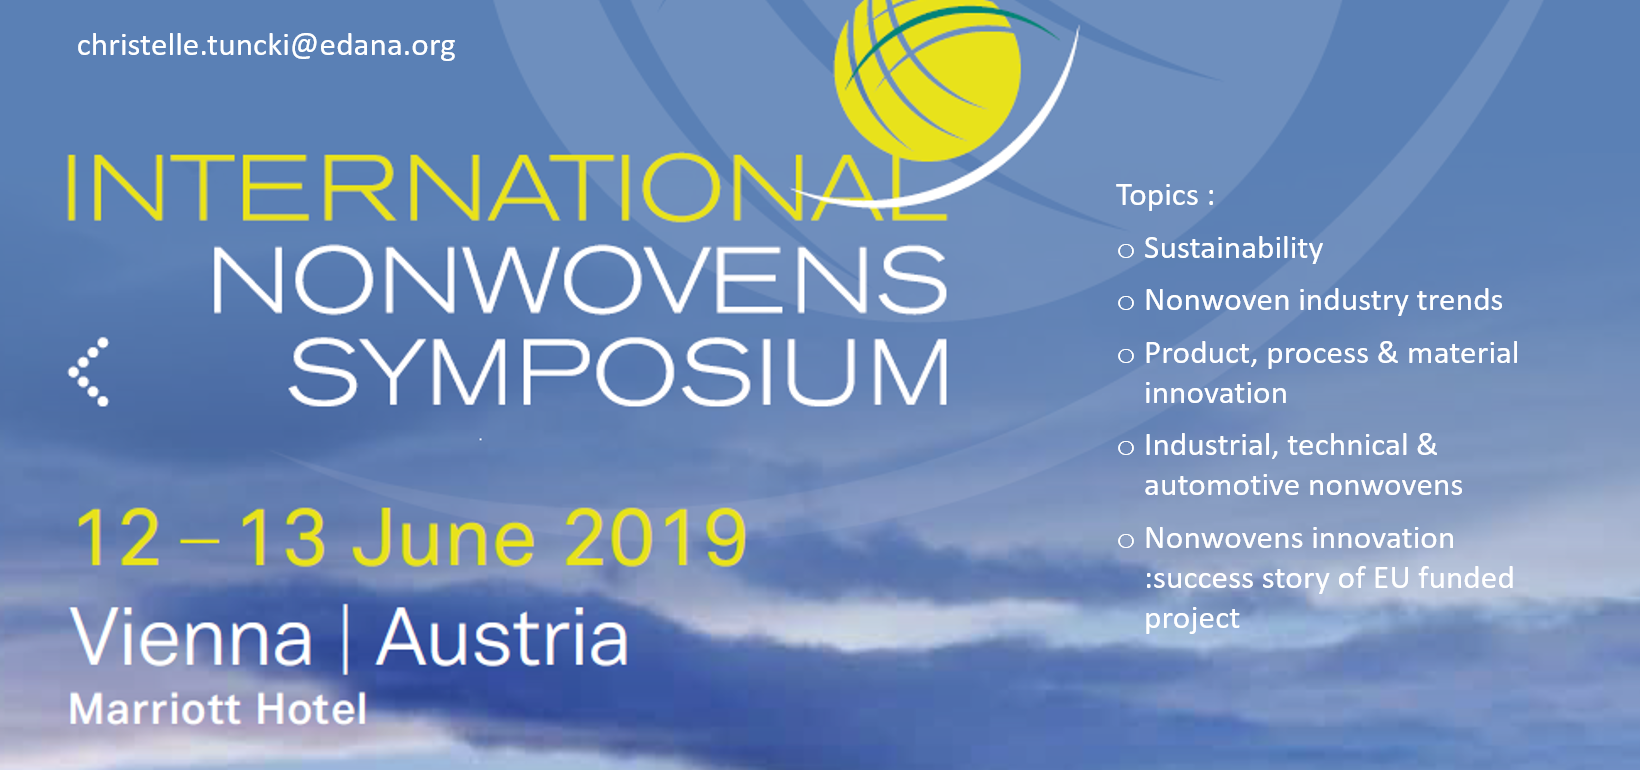 Sustainability is the focus for EDANA’S International Nonwovens Symposium.